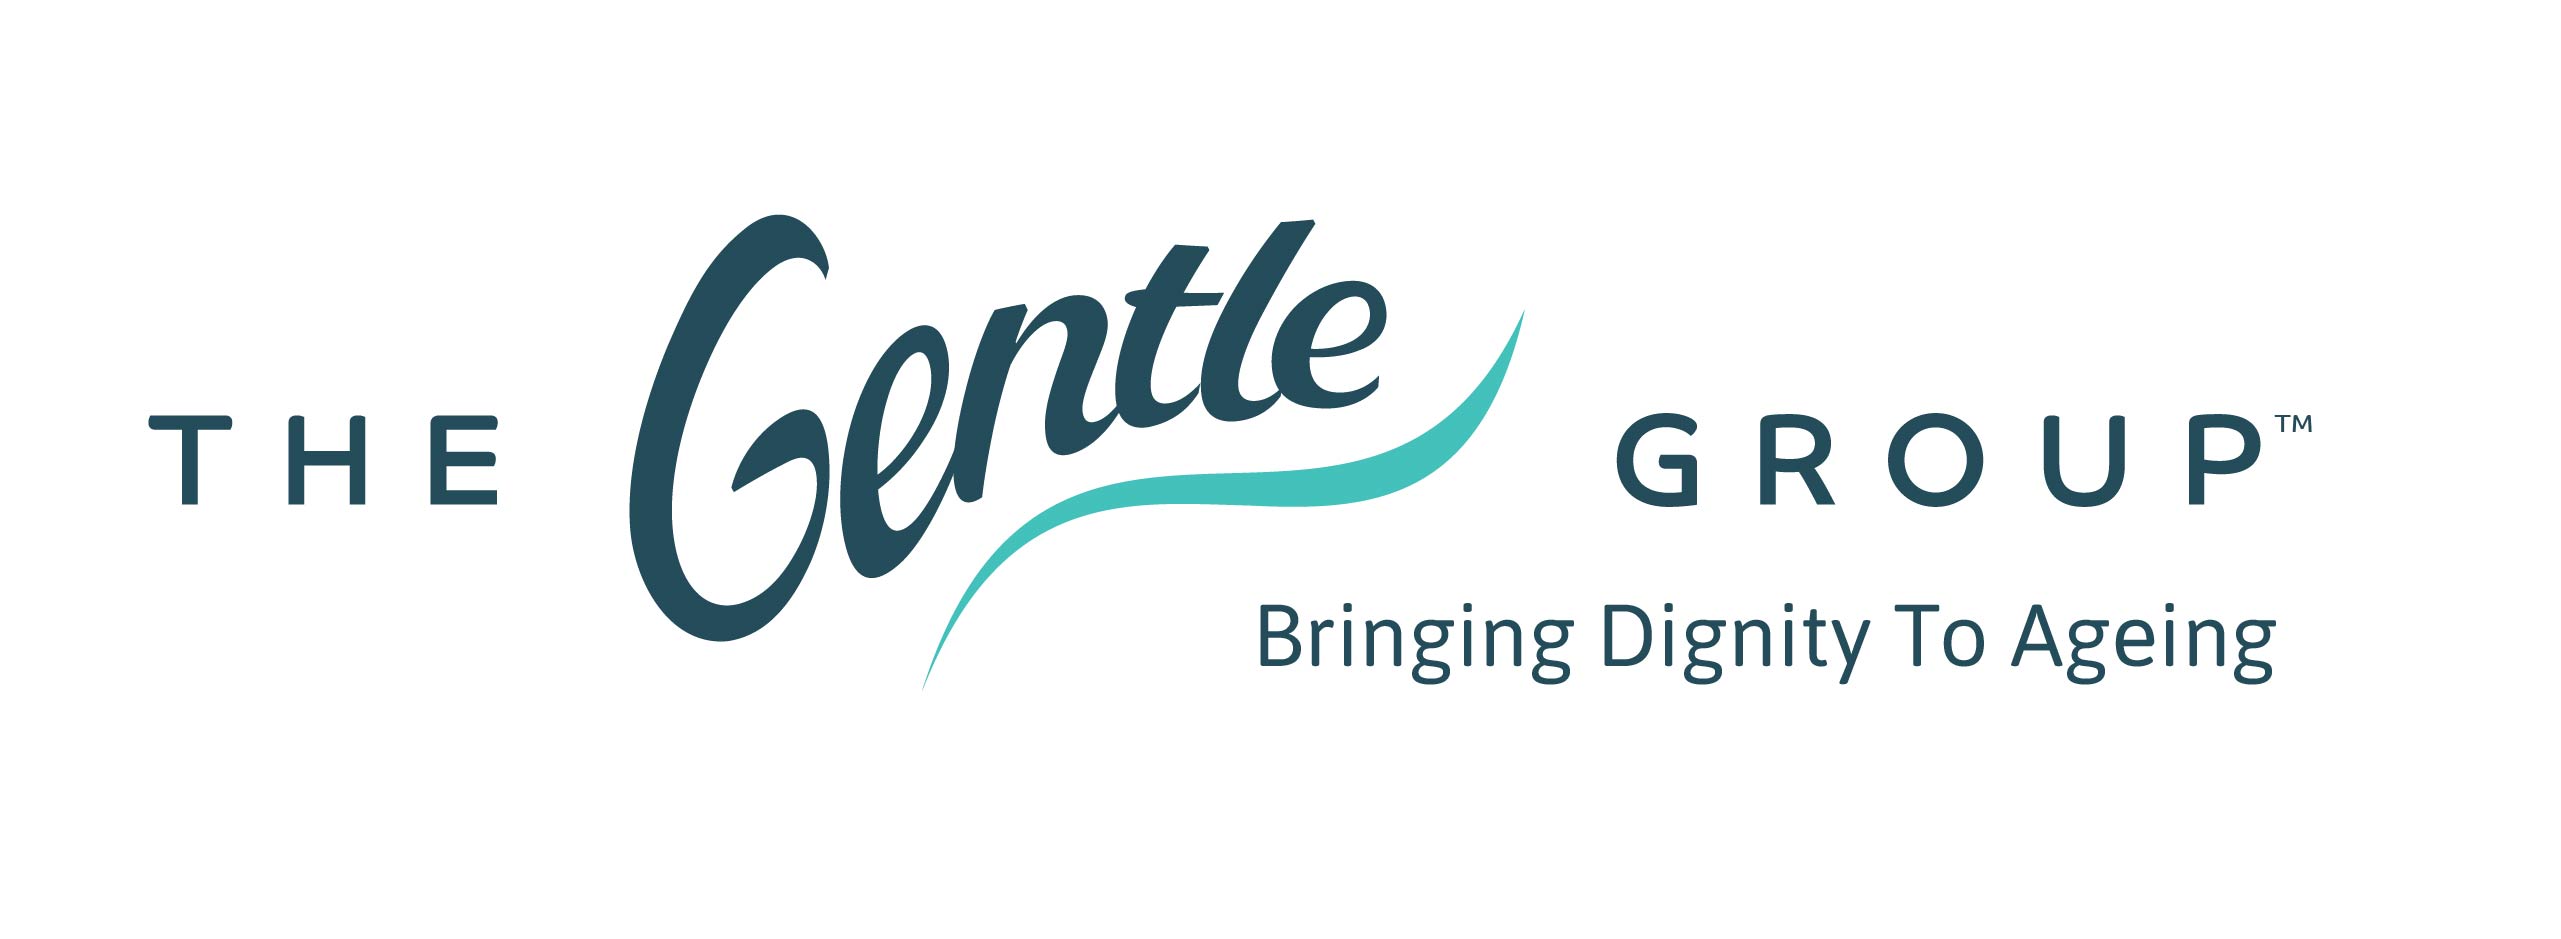 The Gentle Group Pte. Ltd. logo